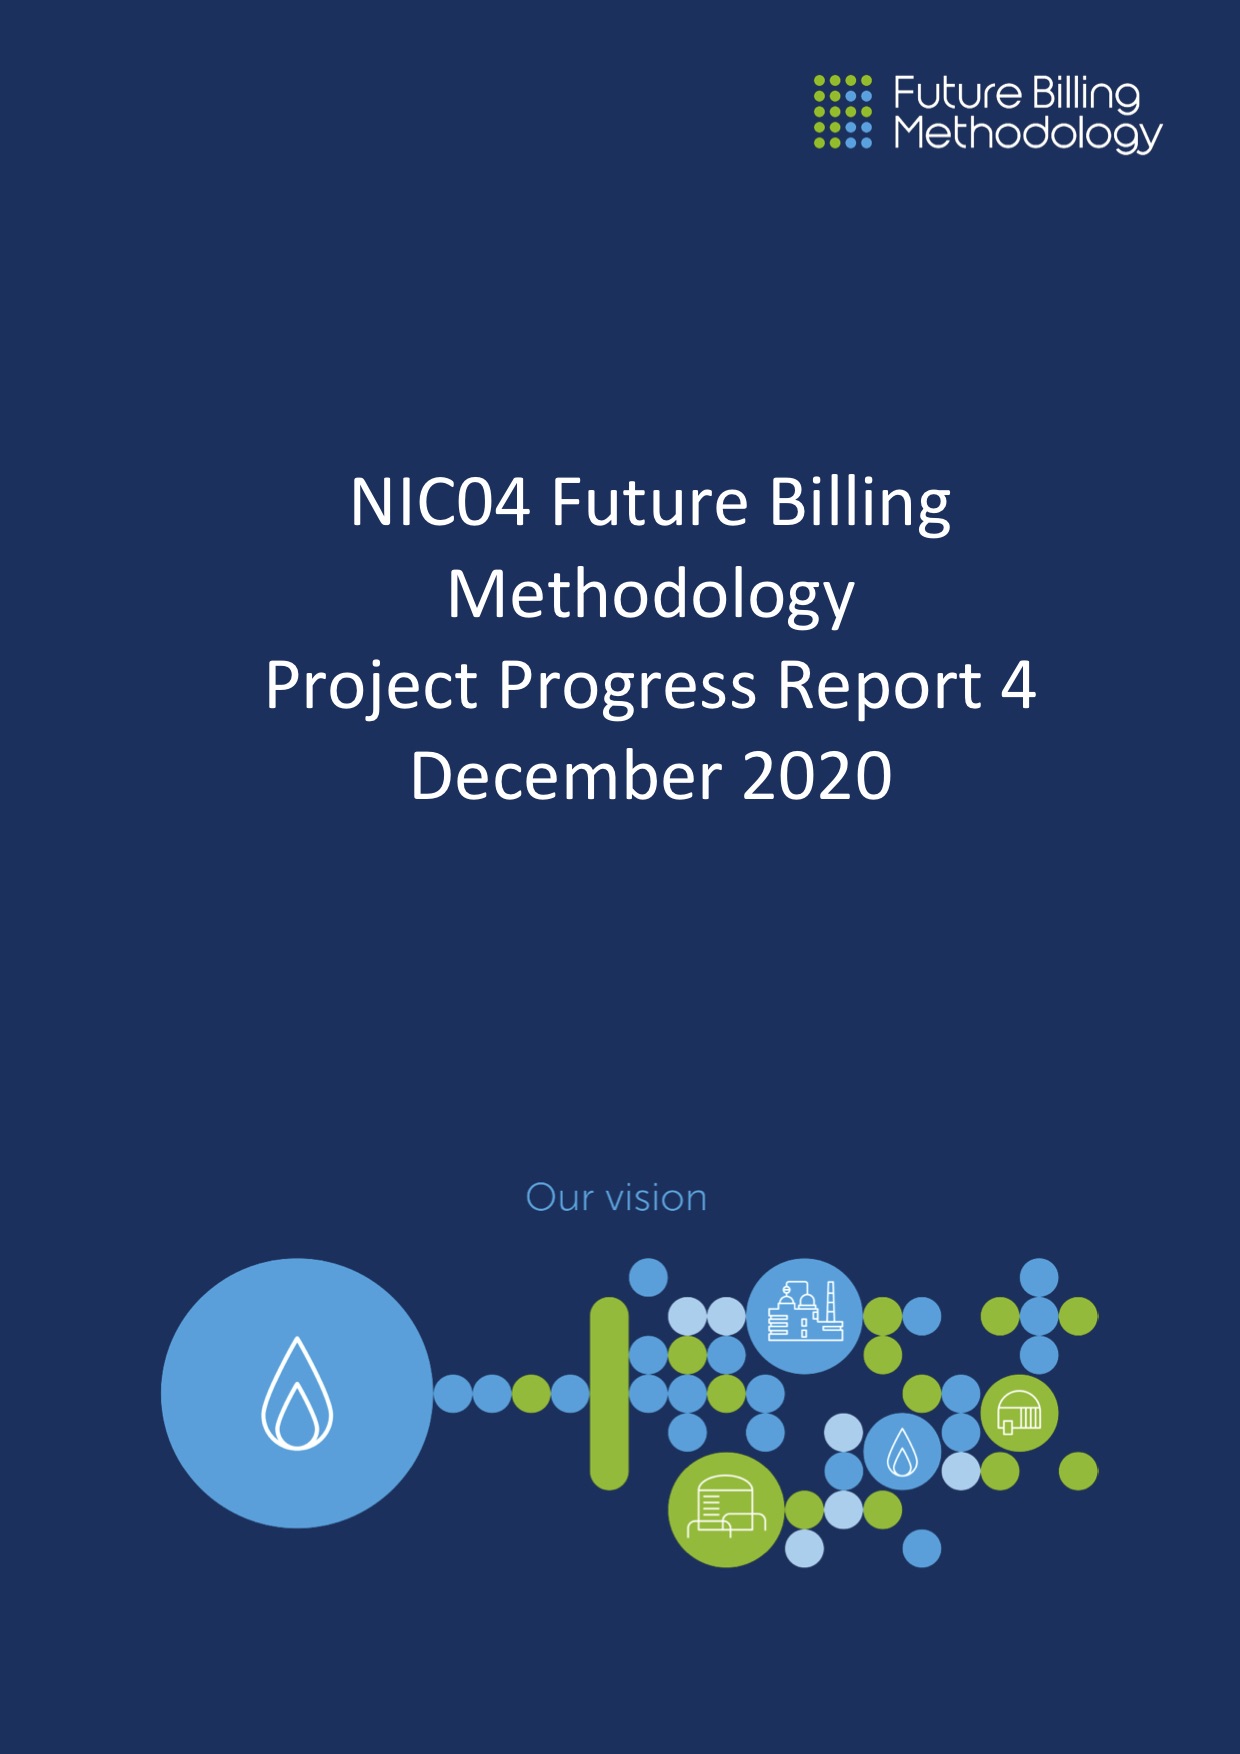 Progress Report December 2021